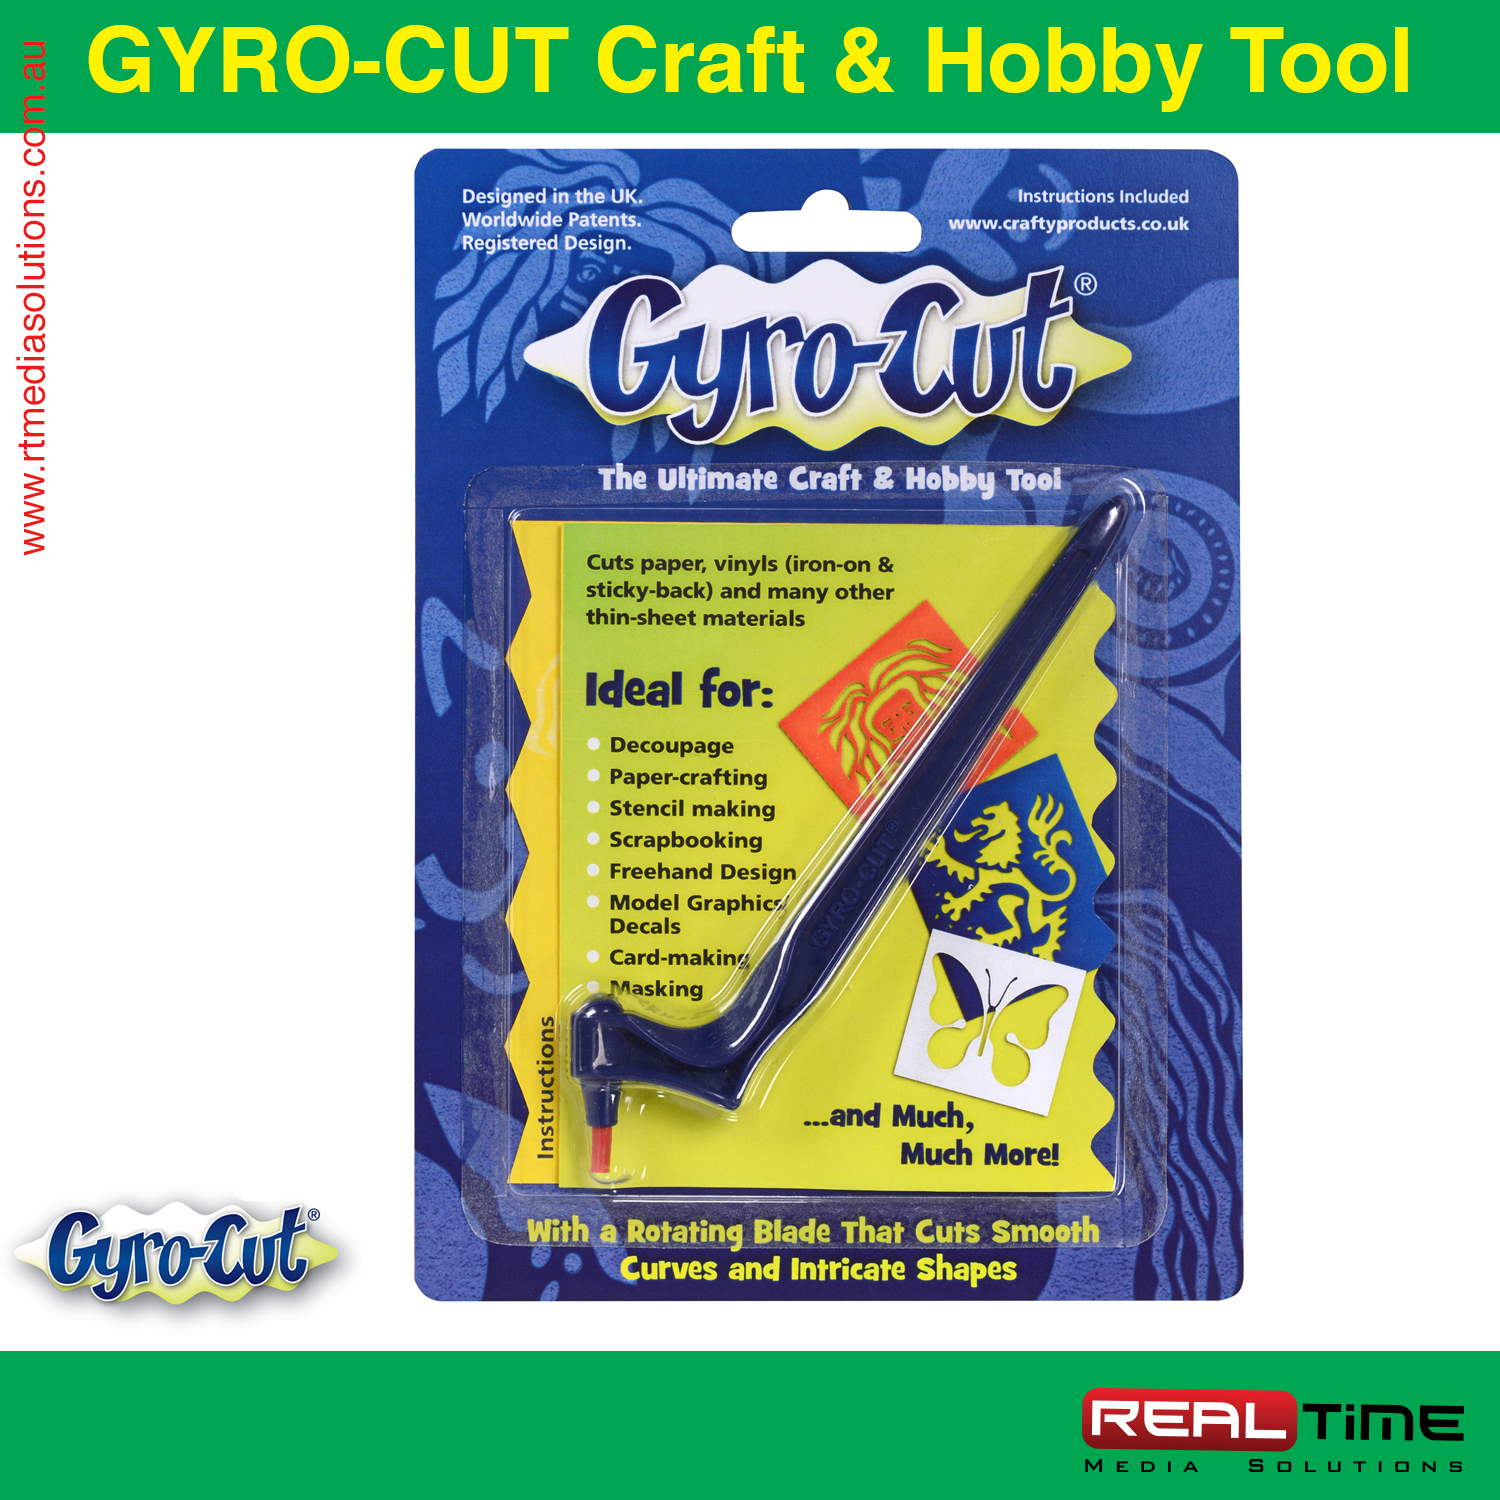 GYRO-CUT Craft & Hobby Tool - RT Media Solutions